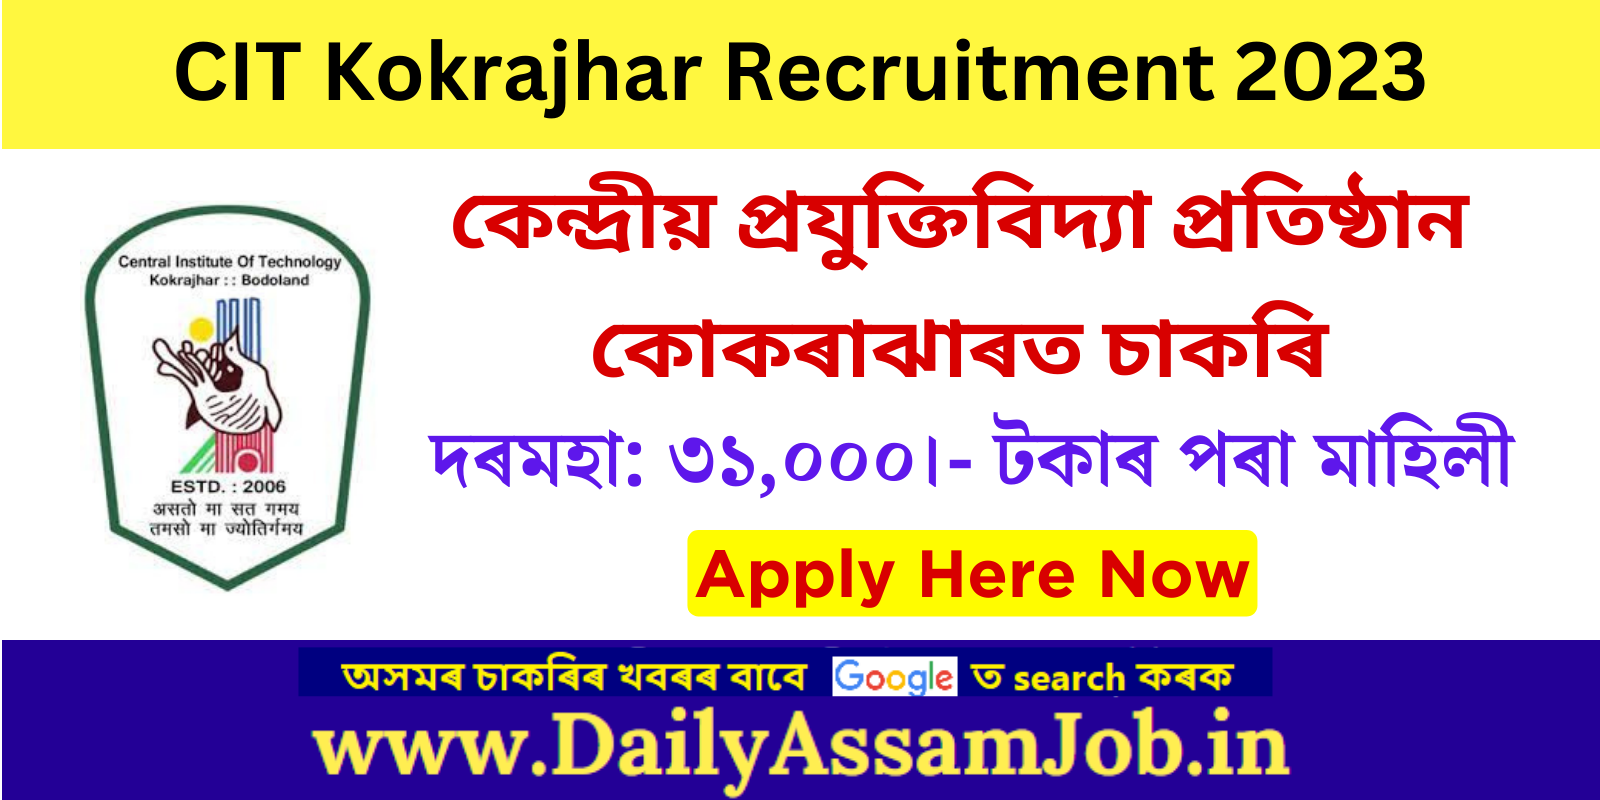 Assam Career :: CIT Kokrajhar Recruitment 2023 for 02 Junior Project Fellow Vacancy